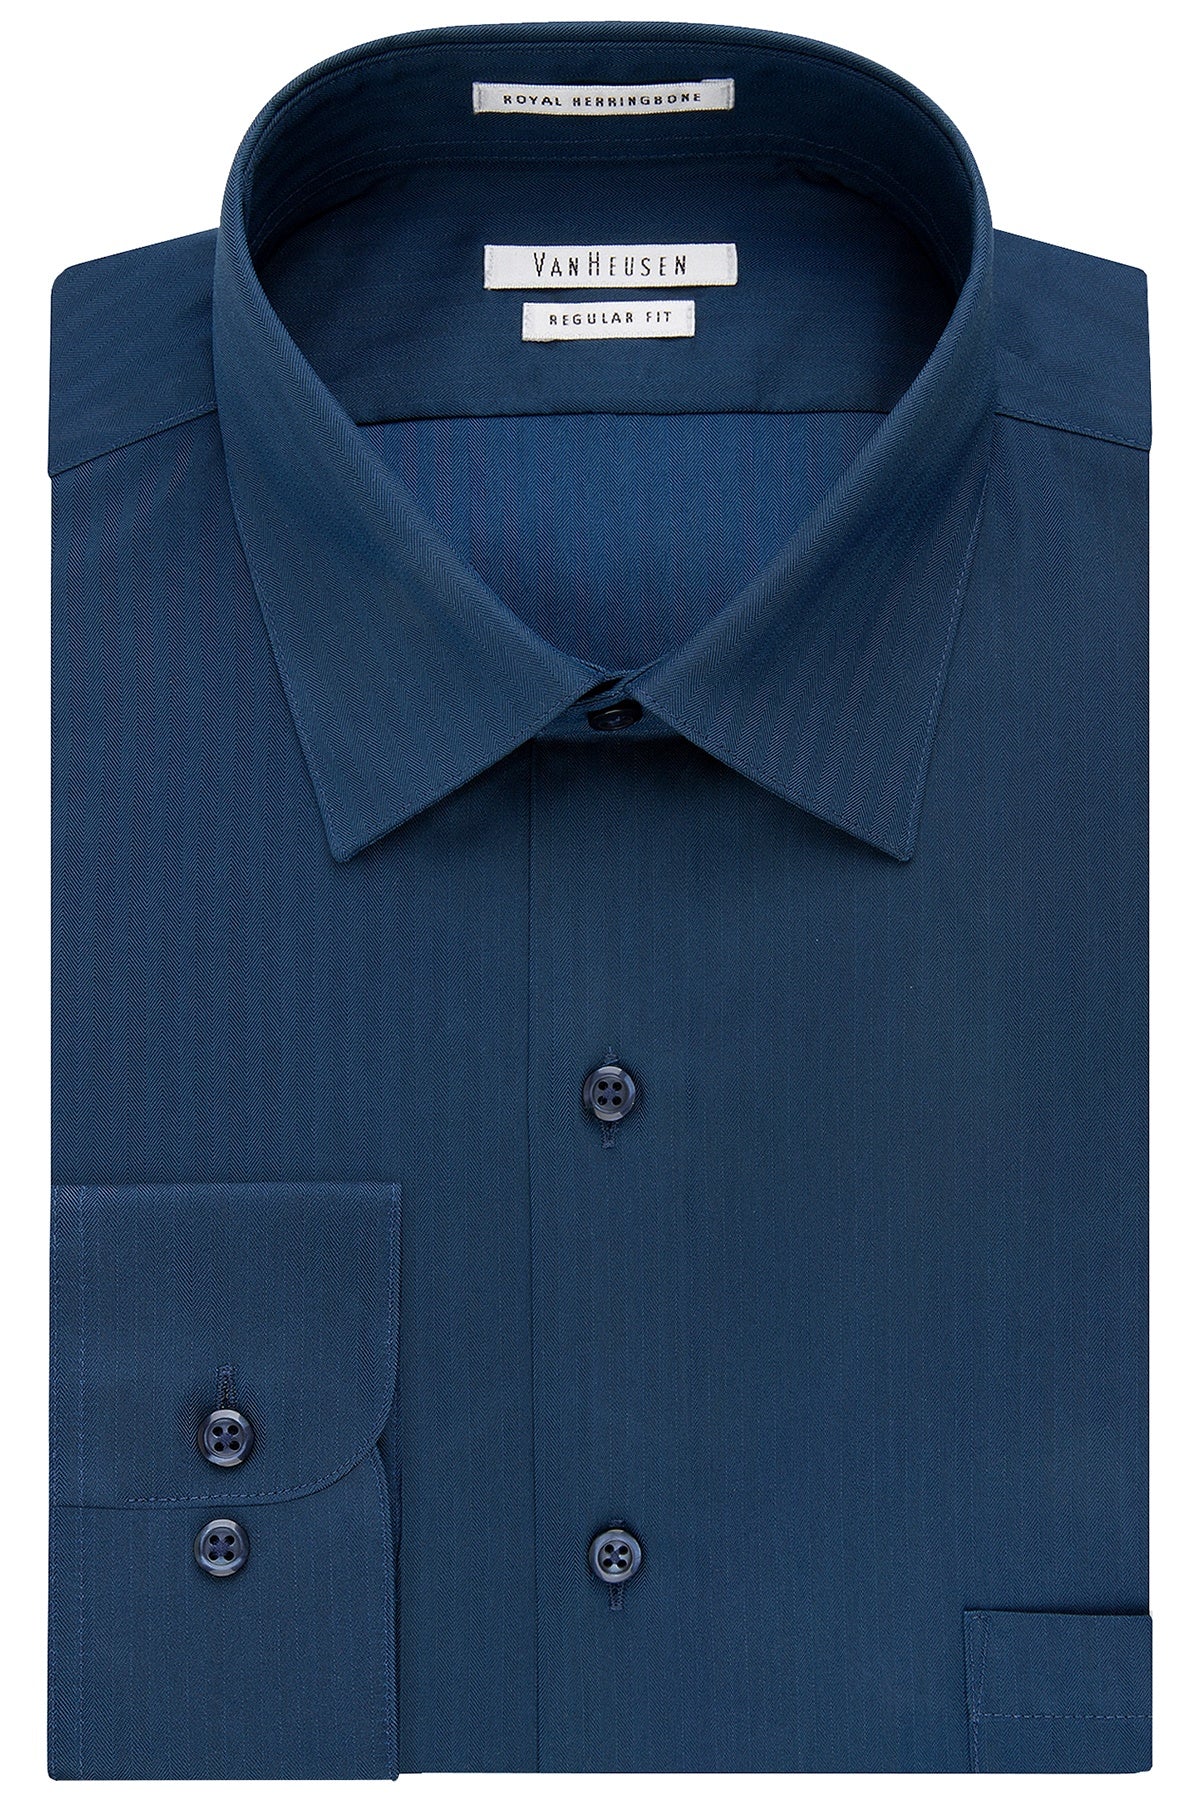 Van Heusen Blue Graphite Solid Herringbone Dress Shirt | CheapUndies